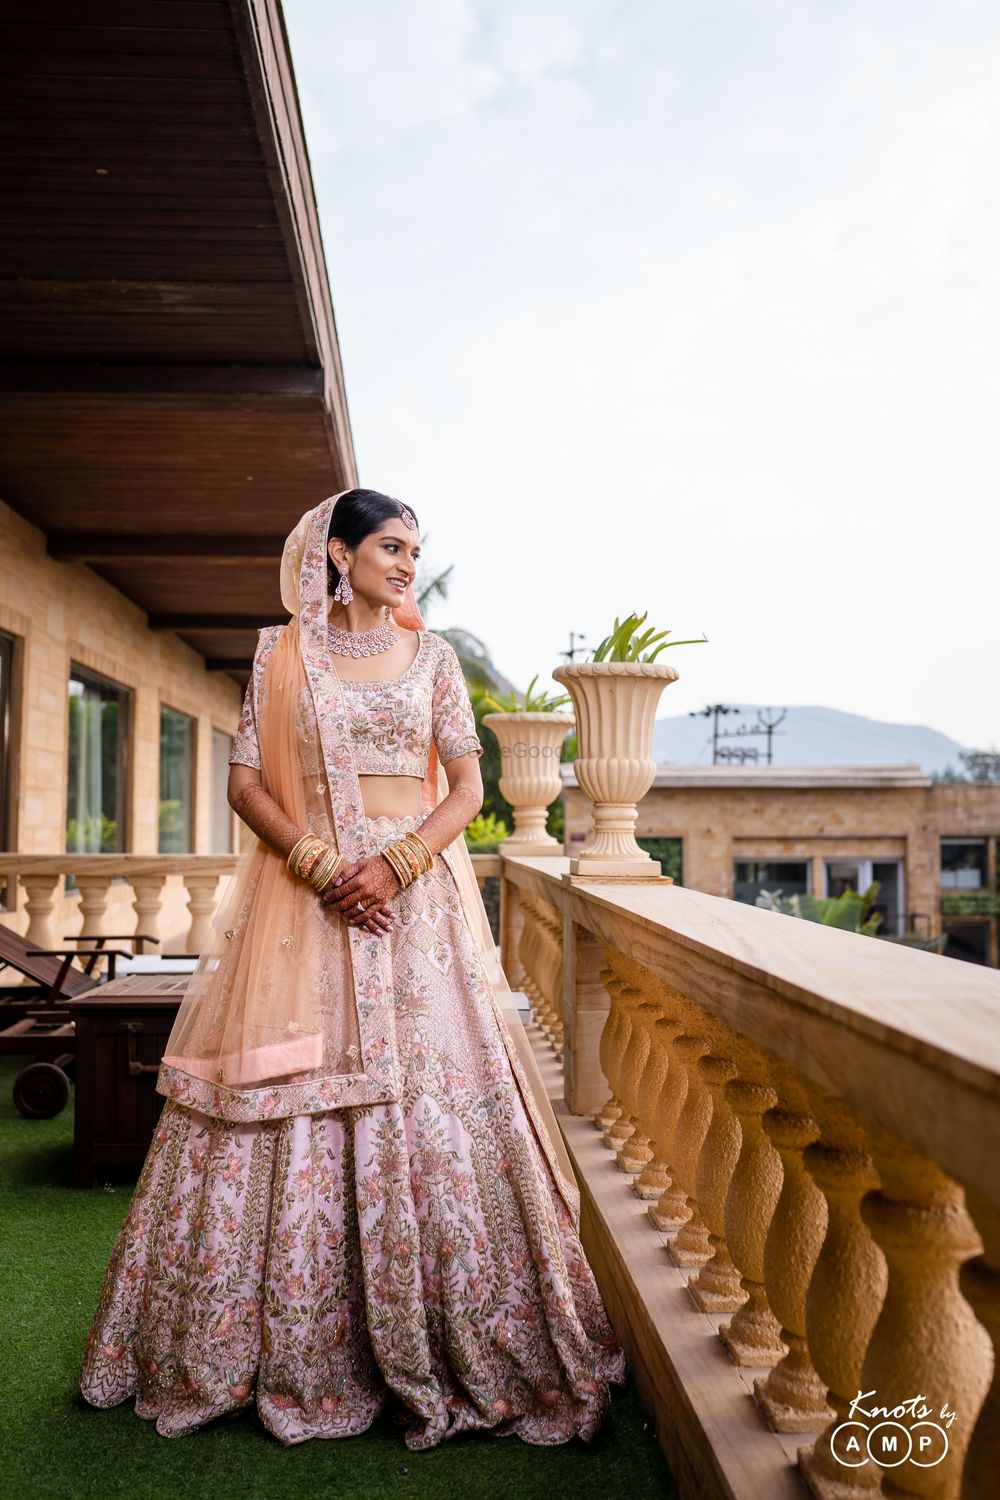 Photo of Bride wearing a blush pink lehenga.